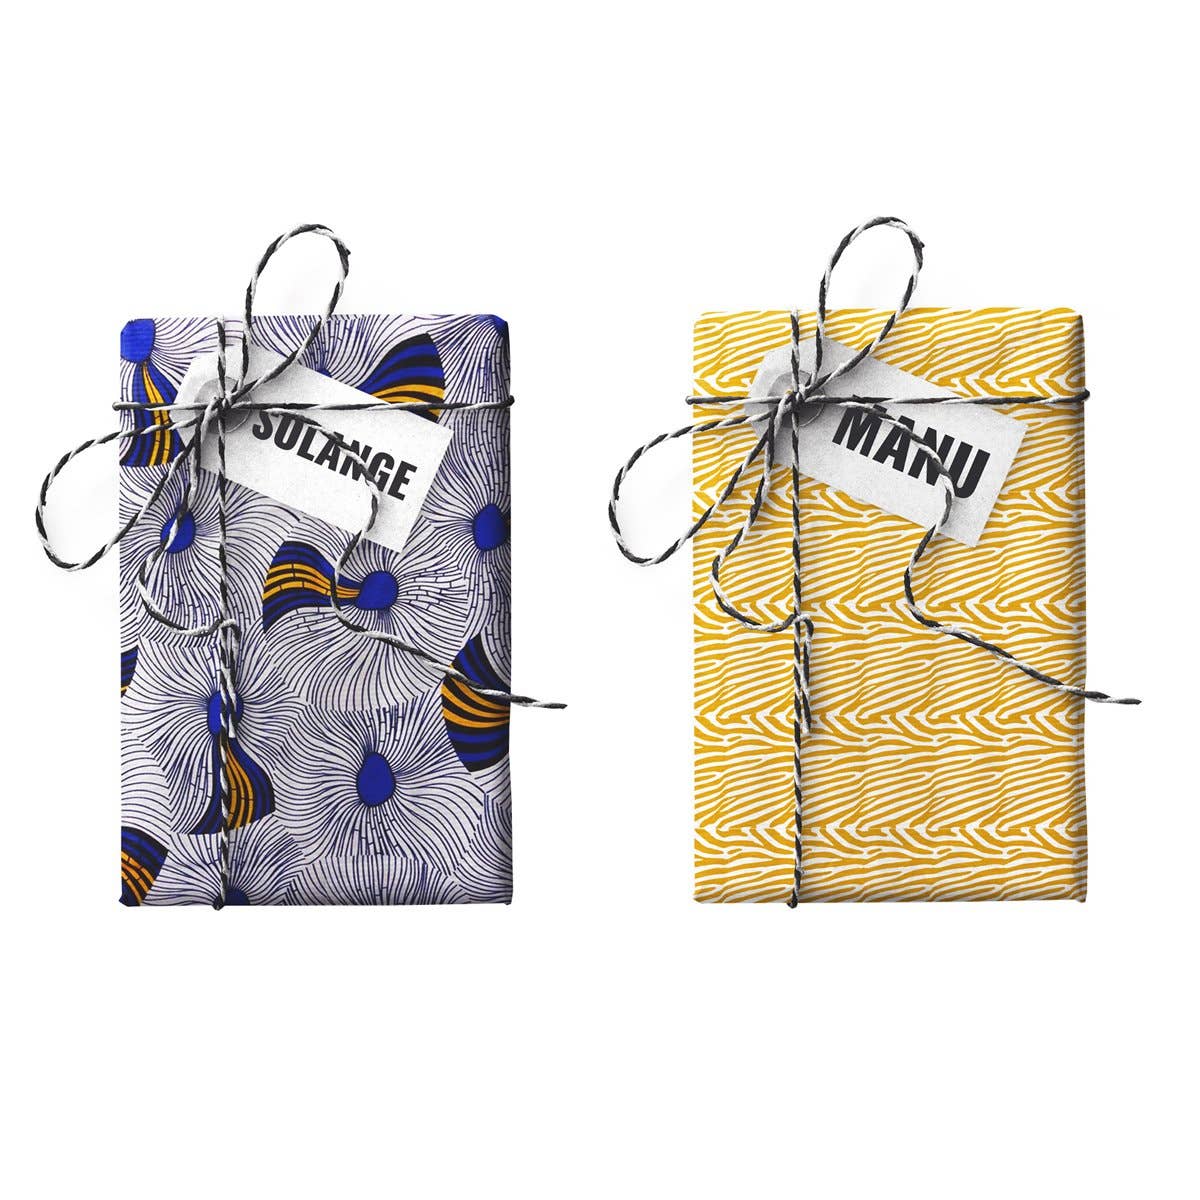 FOLKUS - Solange Manu Double-sided Stone Gift Wrapping Paper